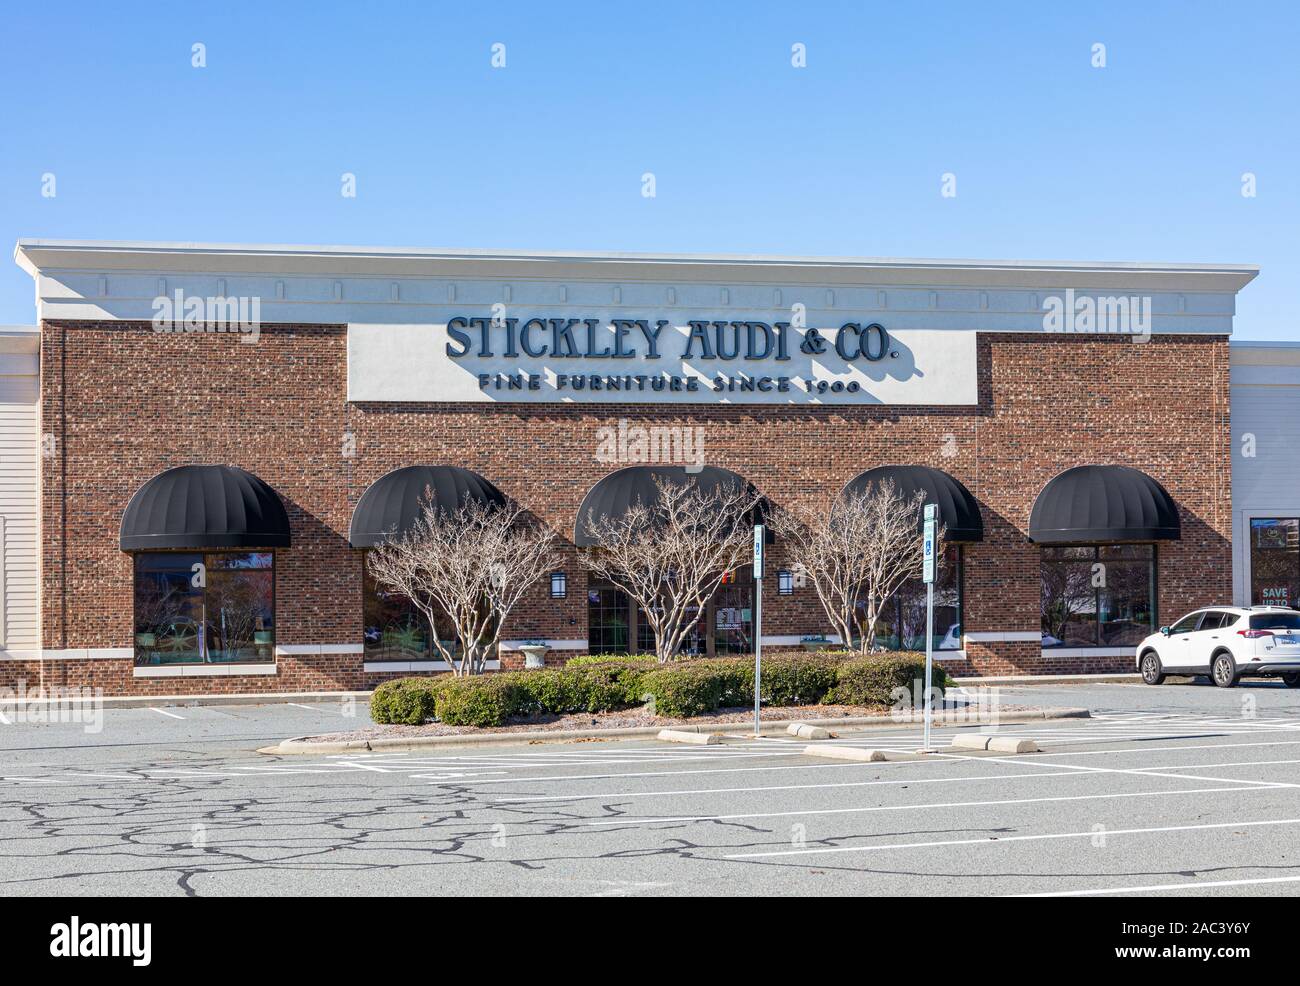 Pineville Nc Usa 24 Nov 2019 A Stickley Audi Co Storefront